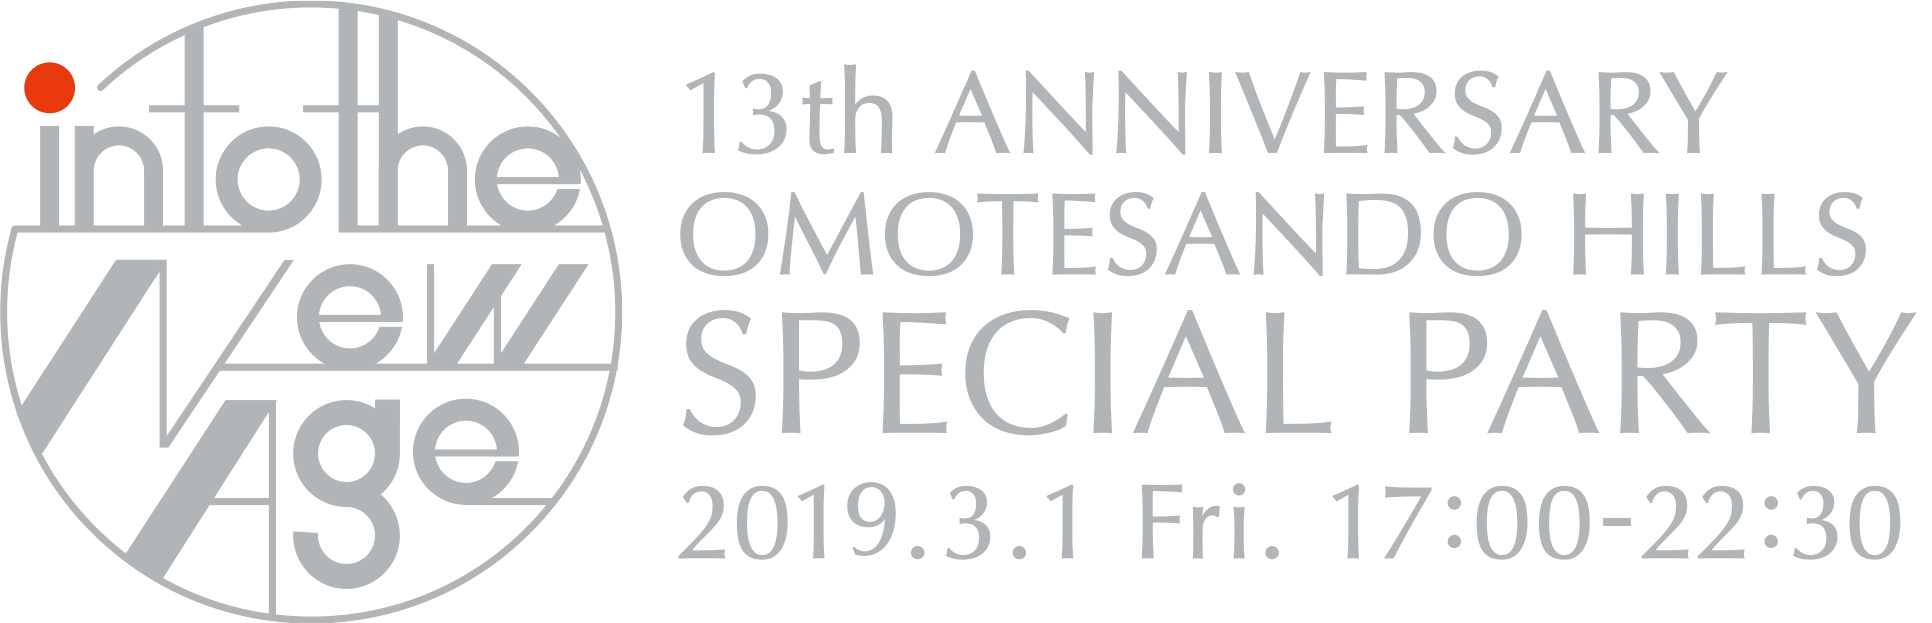 OMOTESANDO HILLS 13 주년 스페셜 파티 2019.3.1.FRI 17 : 00-22 : 30